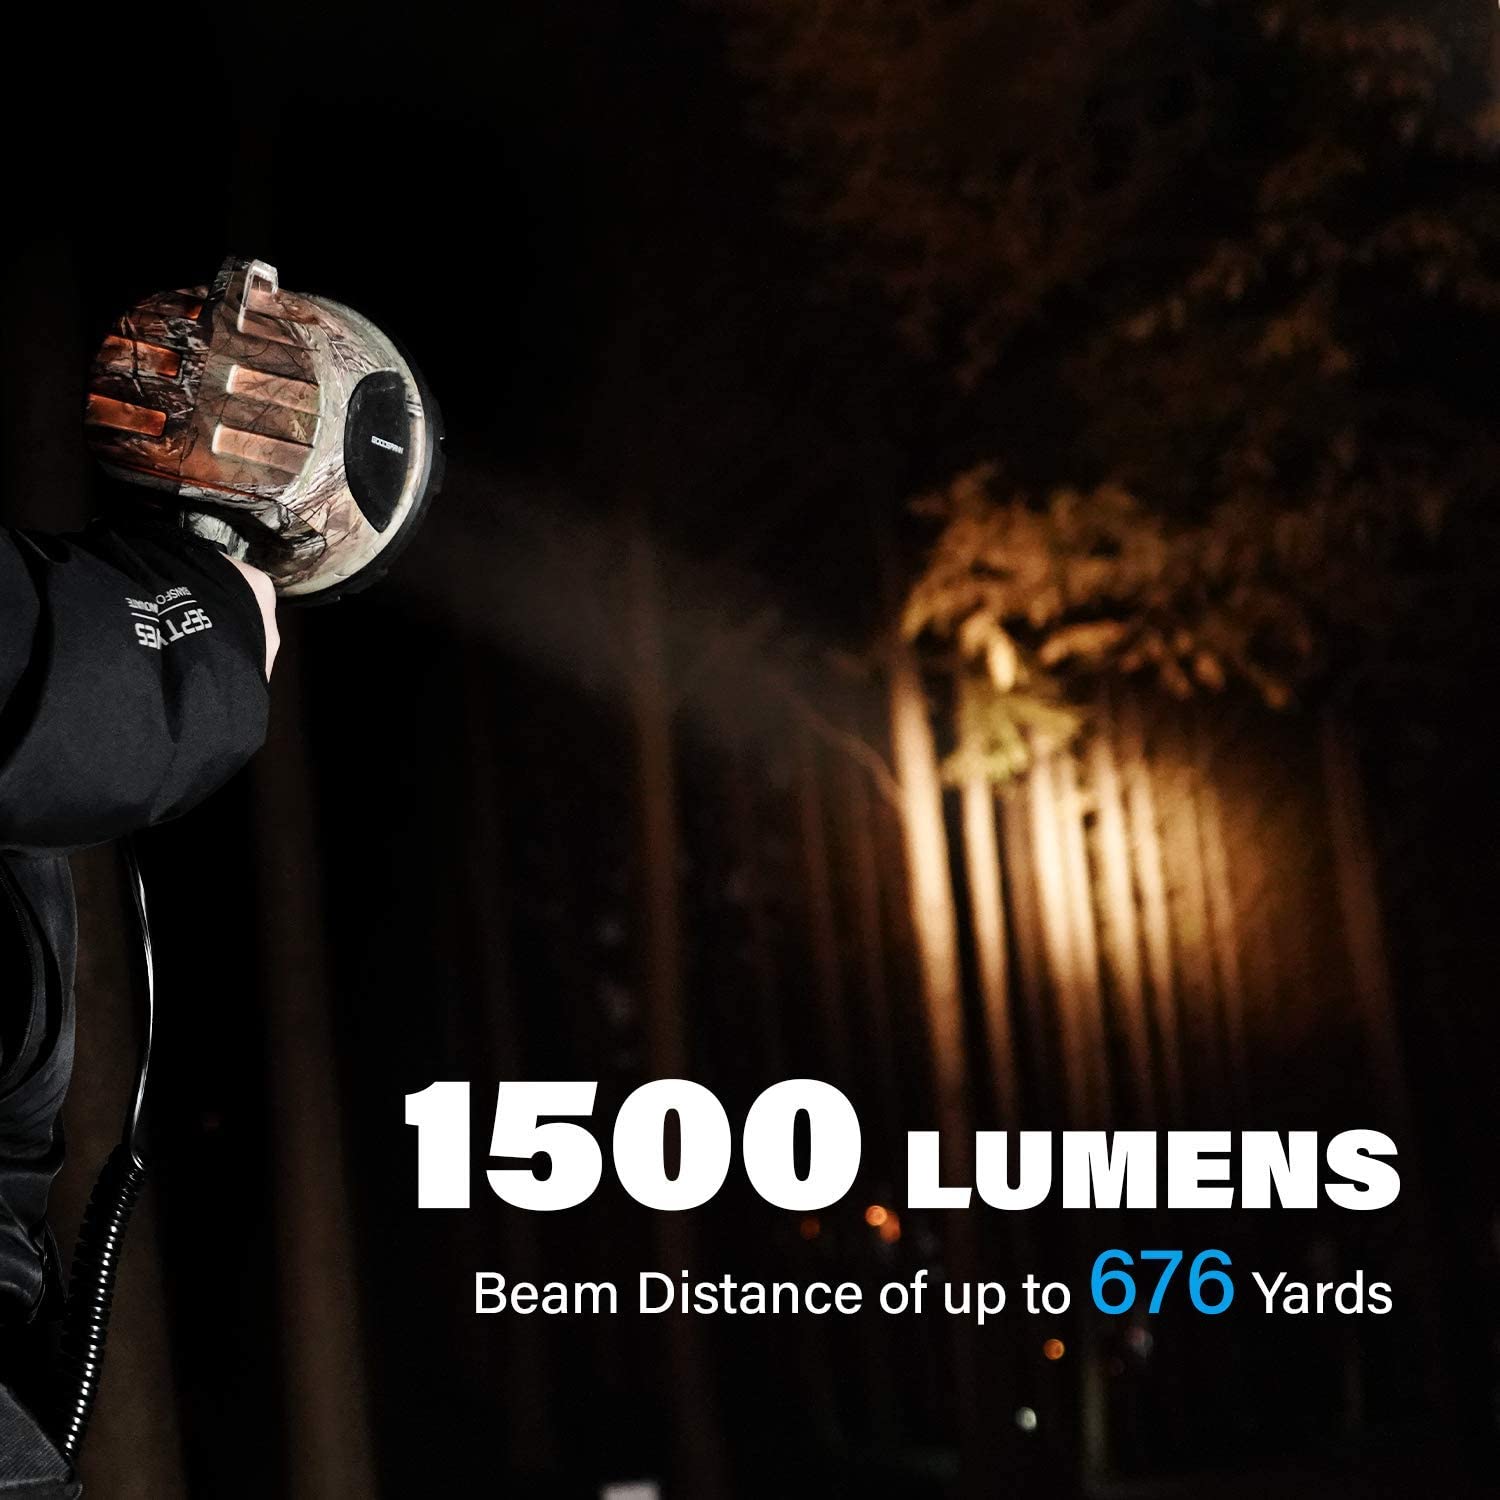 600 Lumen LED Spotlight, Rechargeable Camouflage Pattern